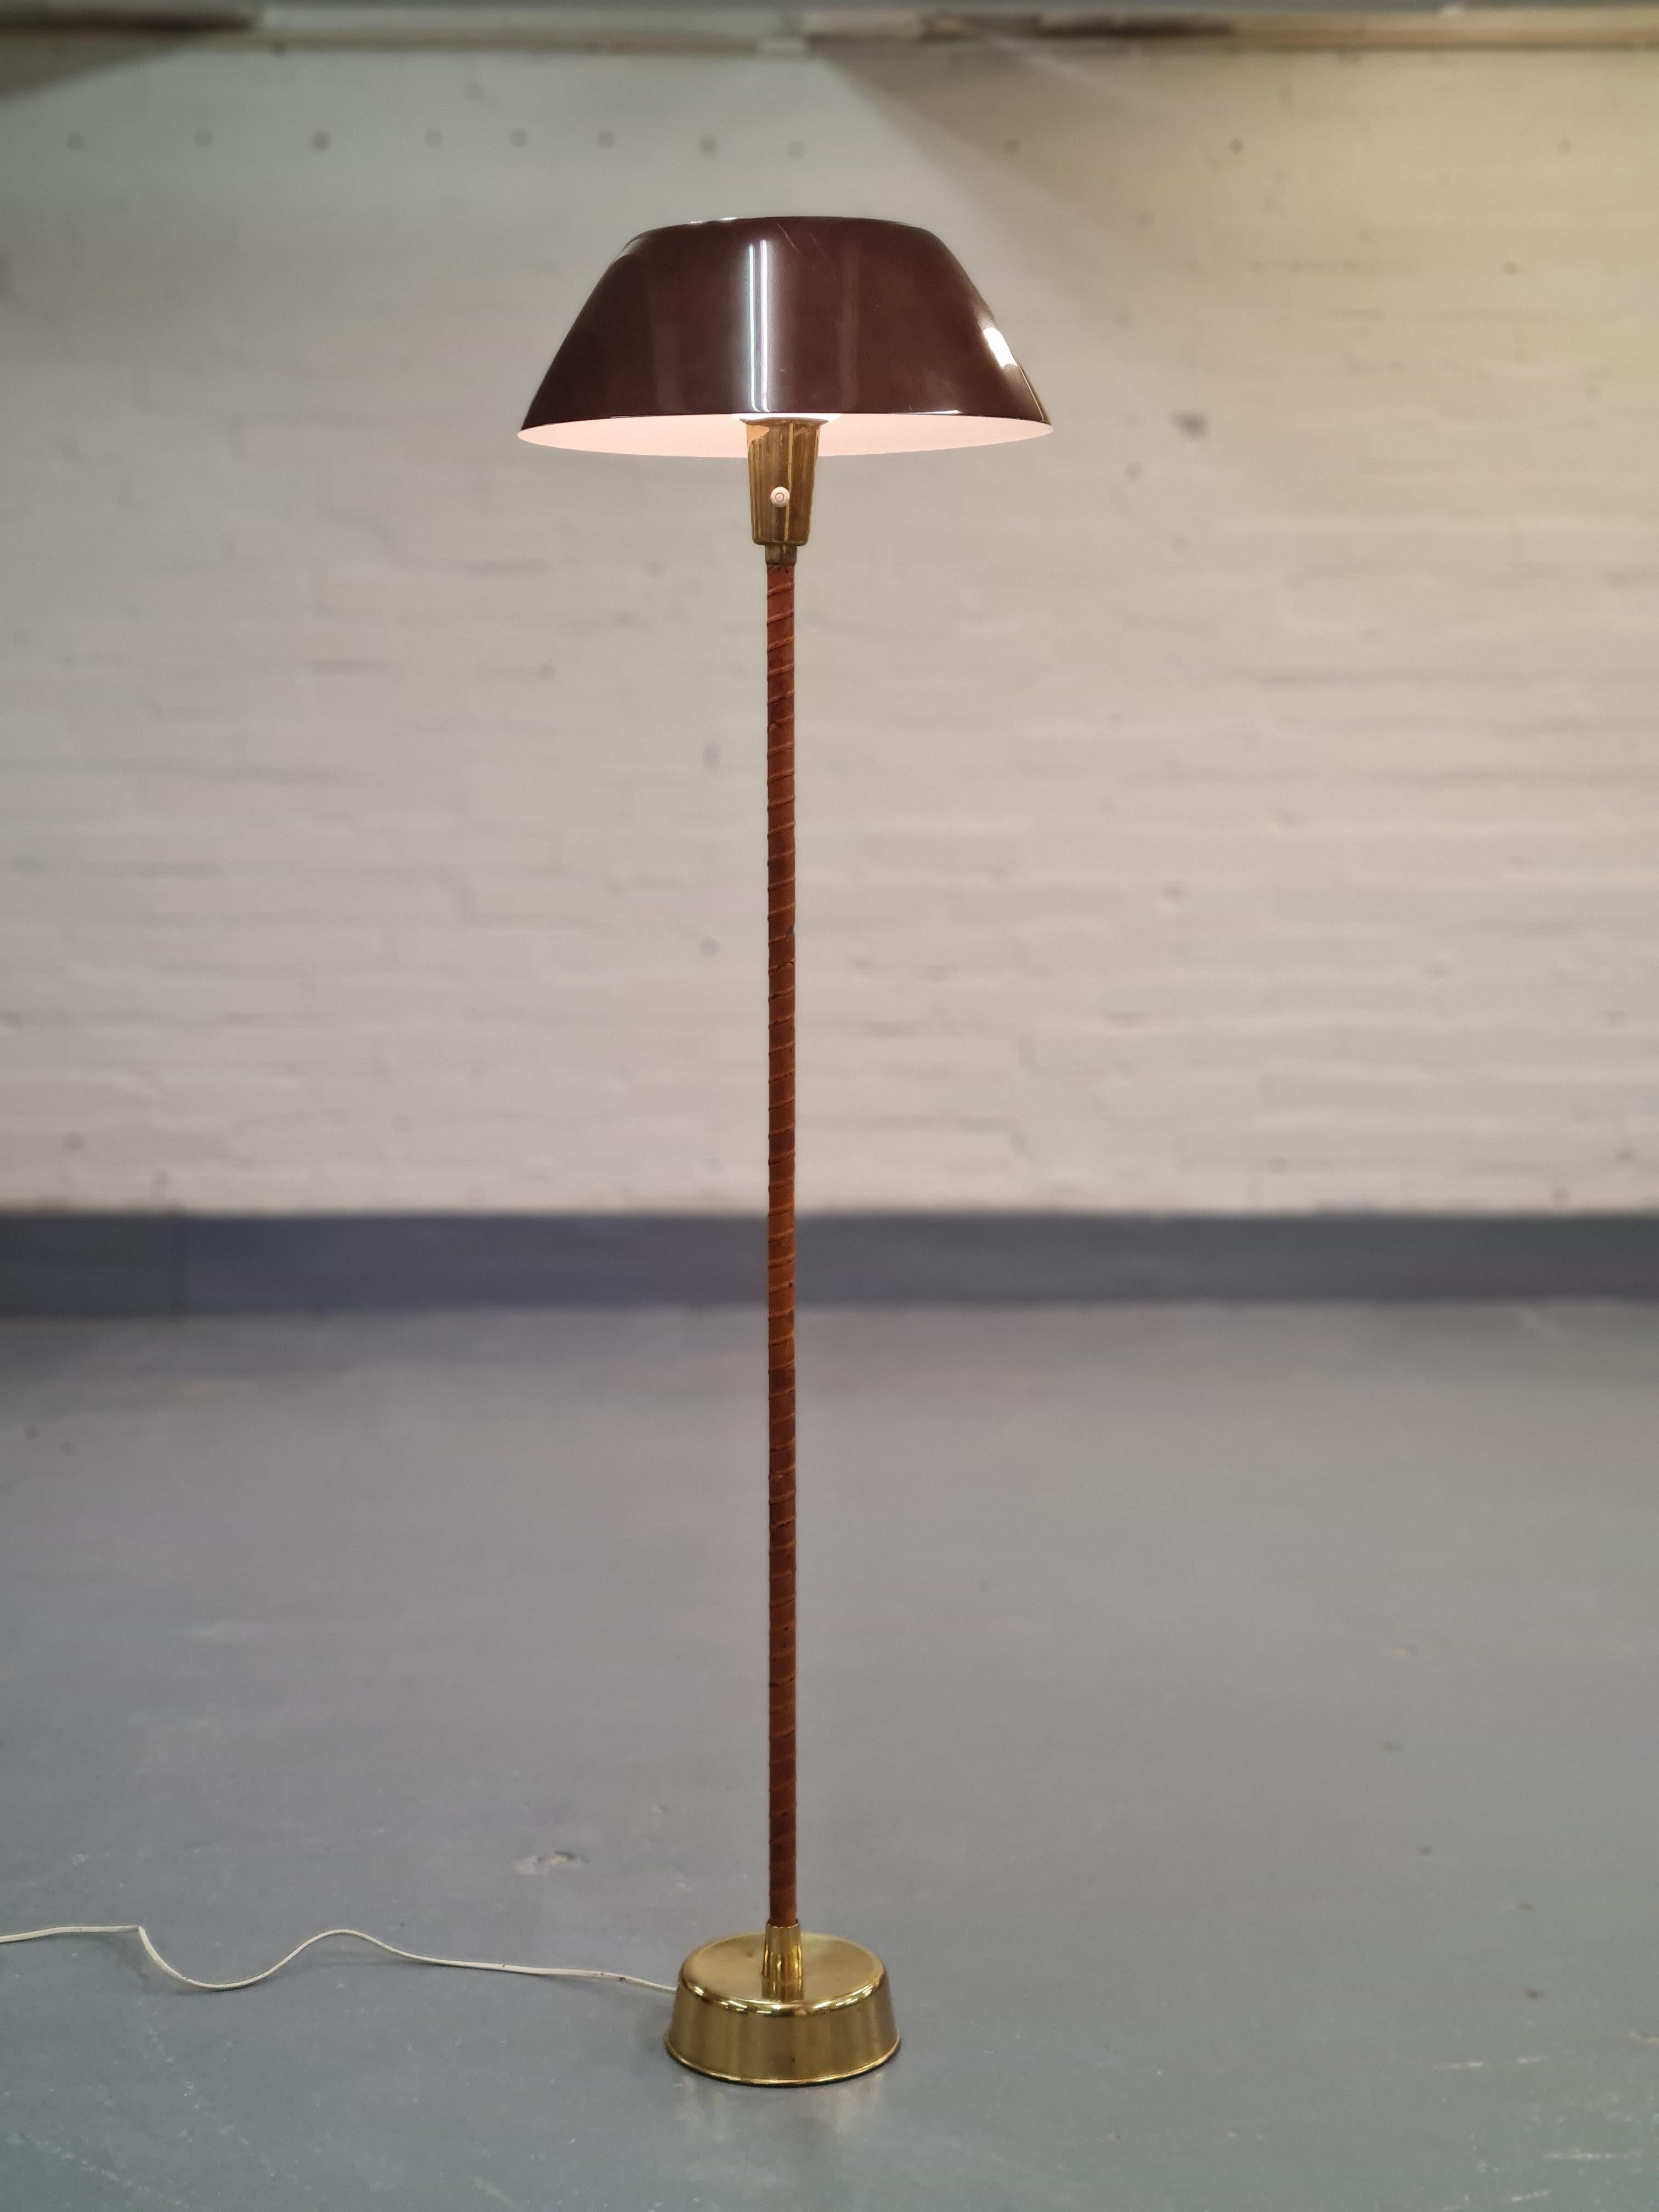 Aluminum Lisa Johansson-Pape Floor Lamp by Orno Oy